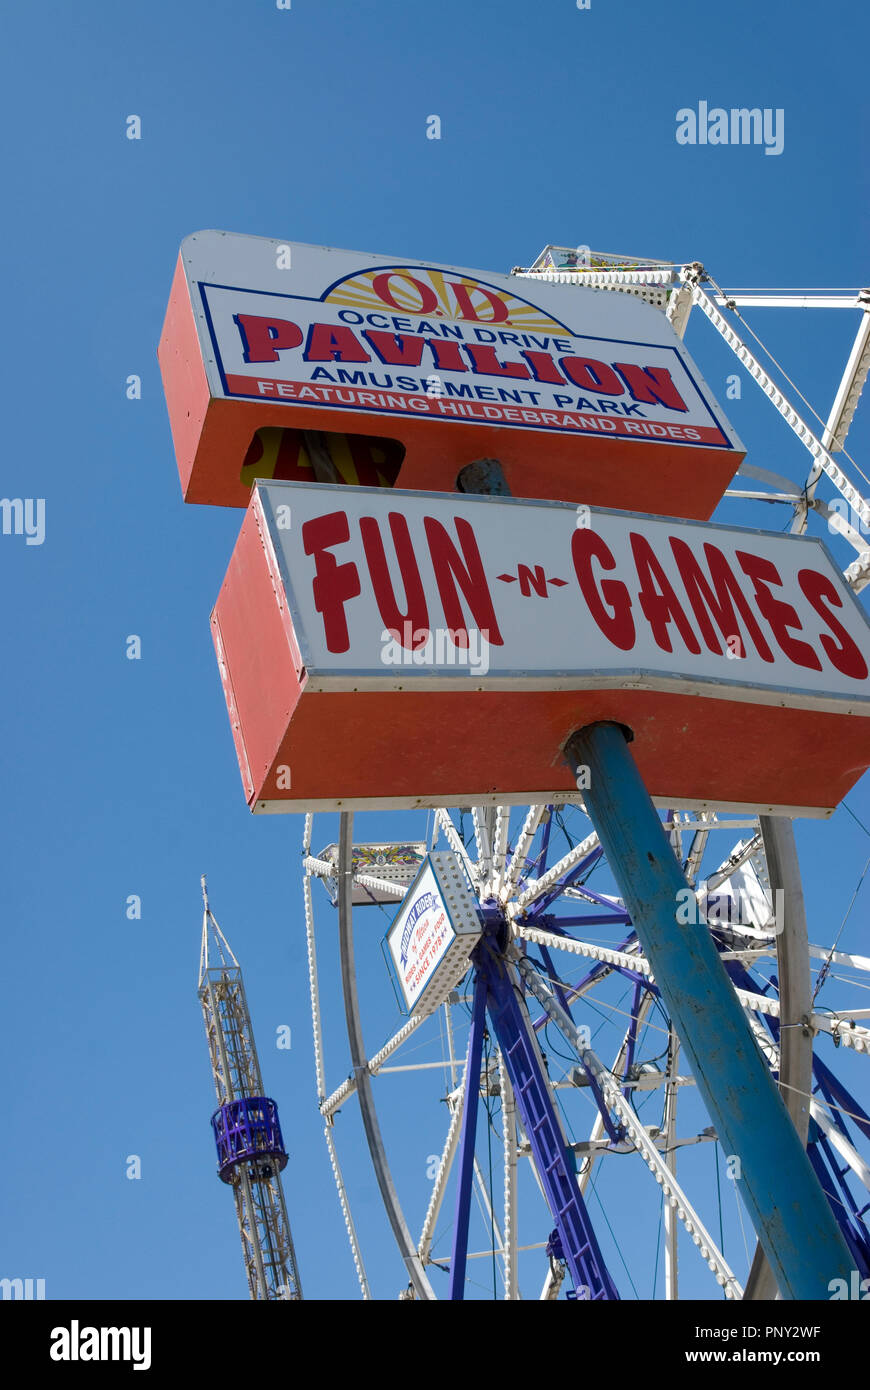 Ocean Drive Pavilion Amusement Park sign at North Myrtle Beach South Carolina USA. Stock Photo